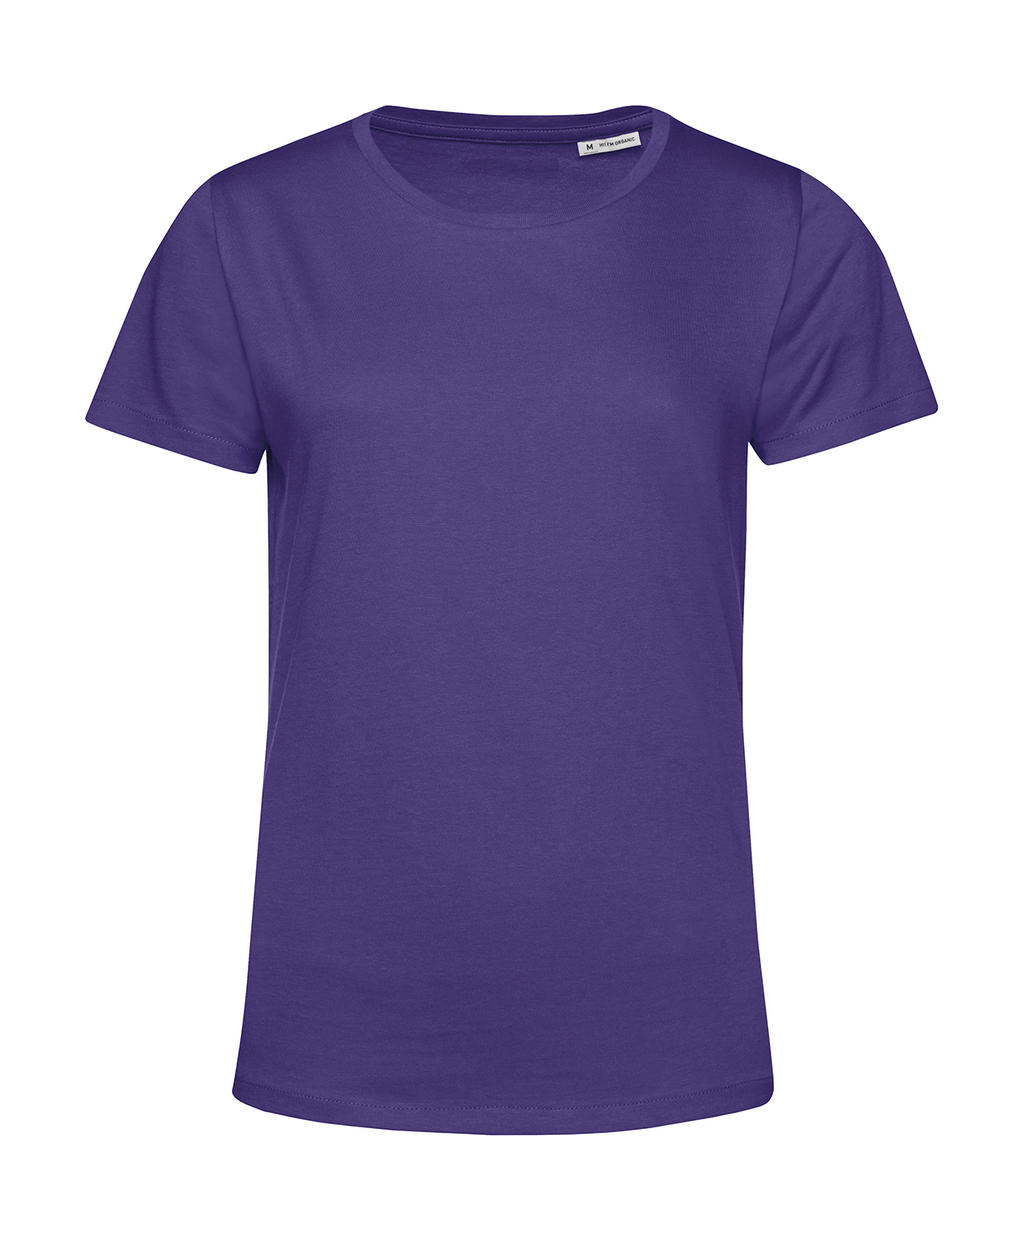 Tričko dámské BC Organic Inspire E150 - fialové, XL